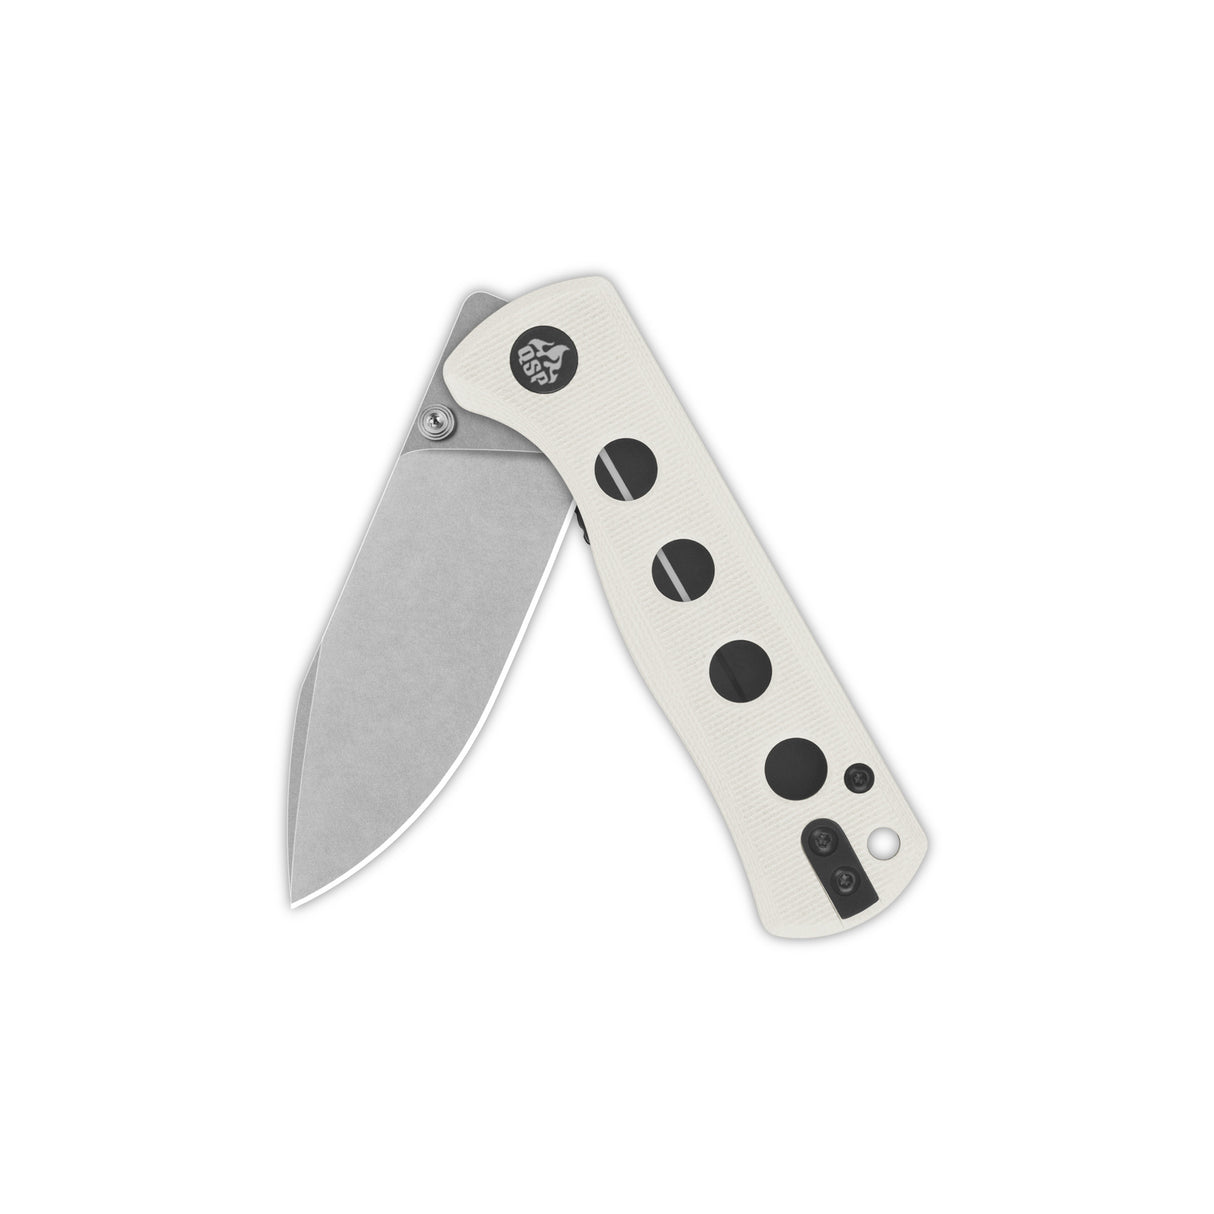 QSP Canary Folder Liner Lock Pocket Knife 14C28N Blade Purple G10 Hand –  QSP KNIFE